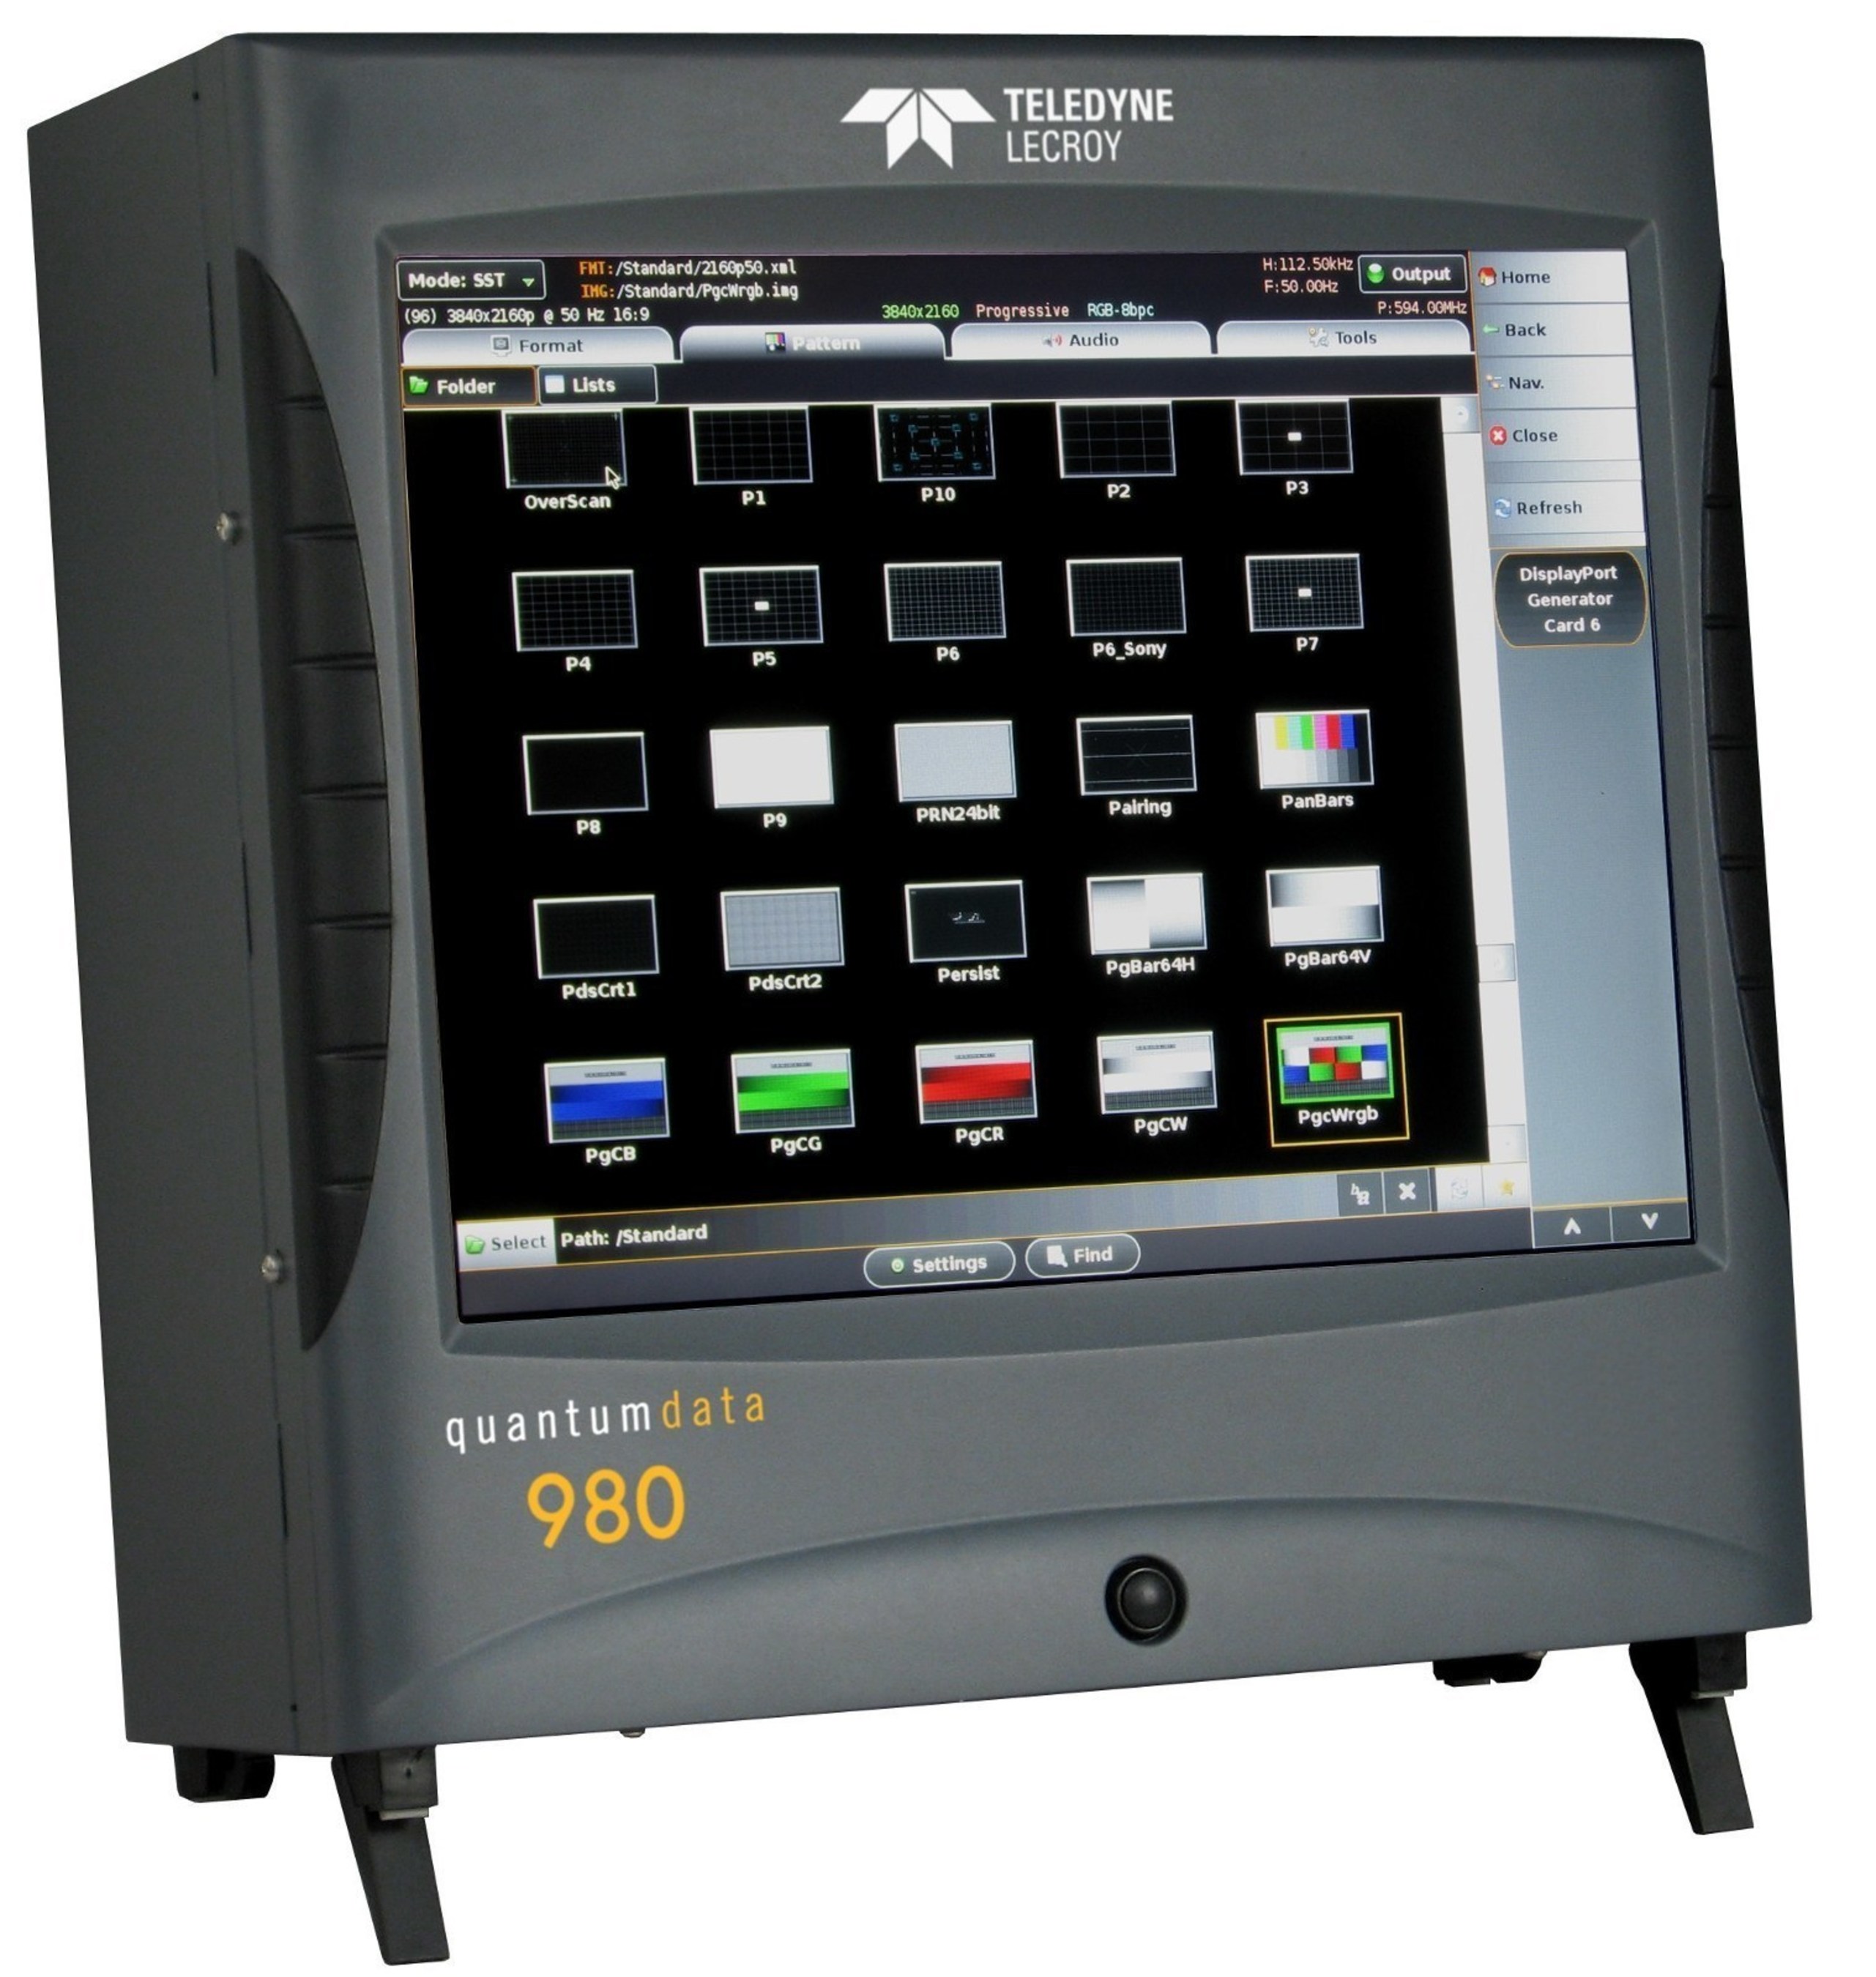 Teledyne LeCroy Announces Release of 980 Series SDI Video Generator module